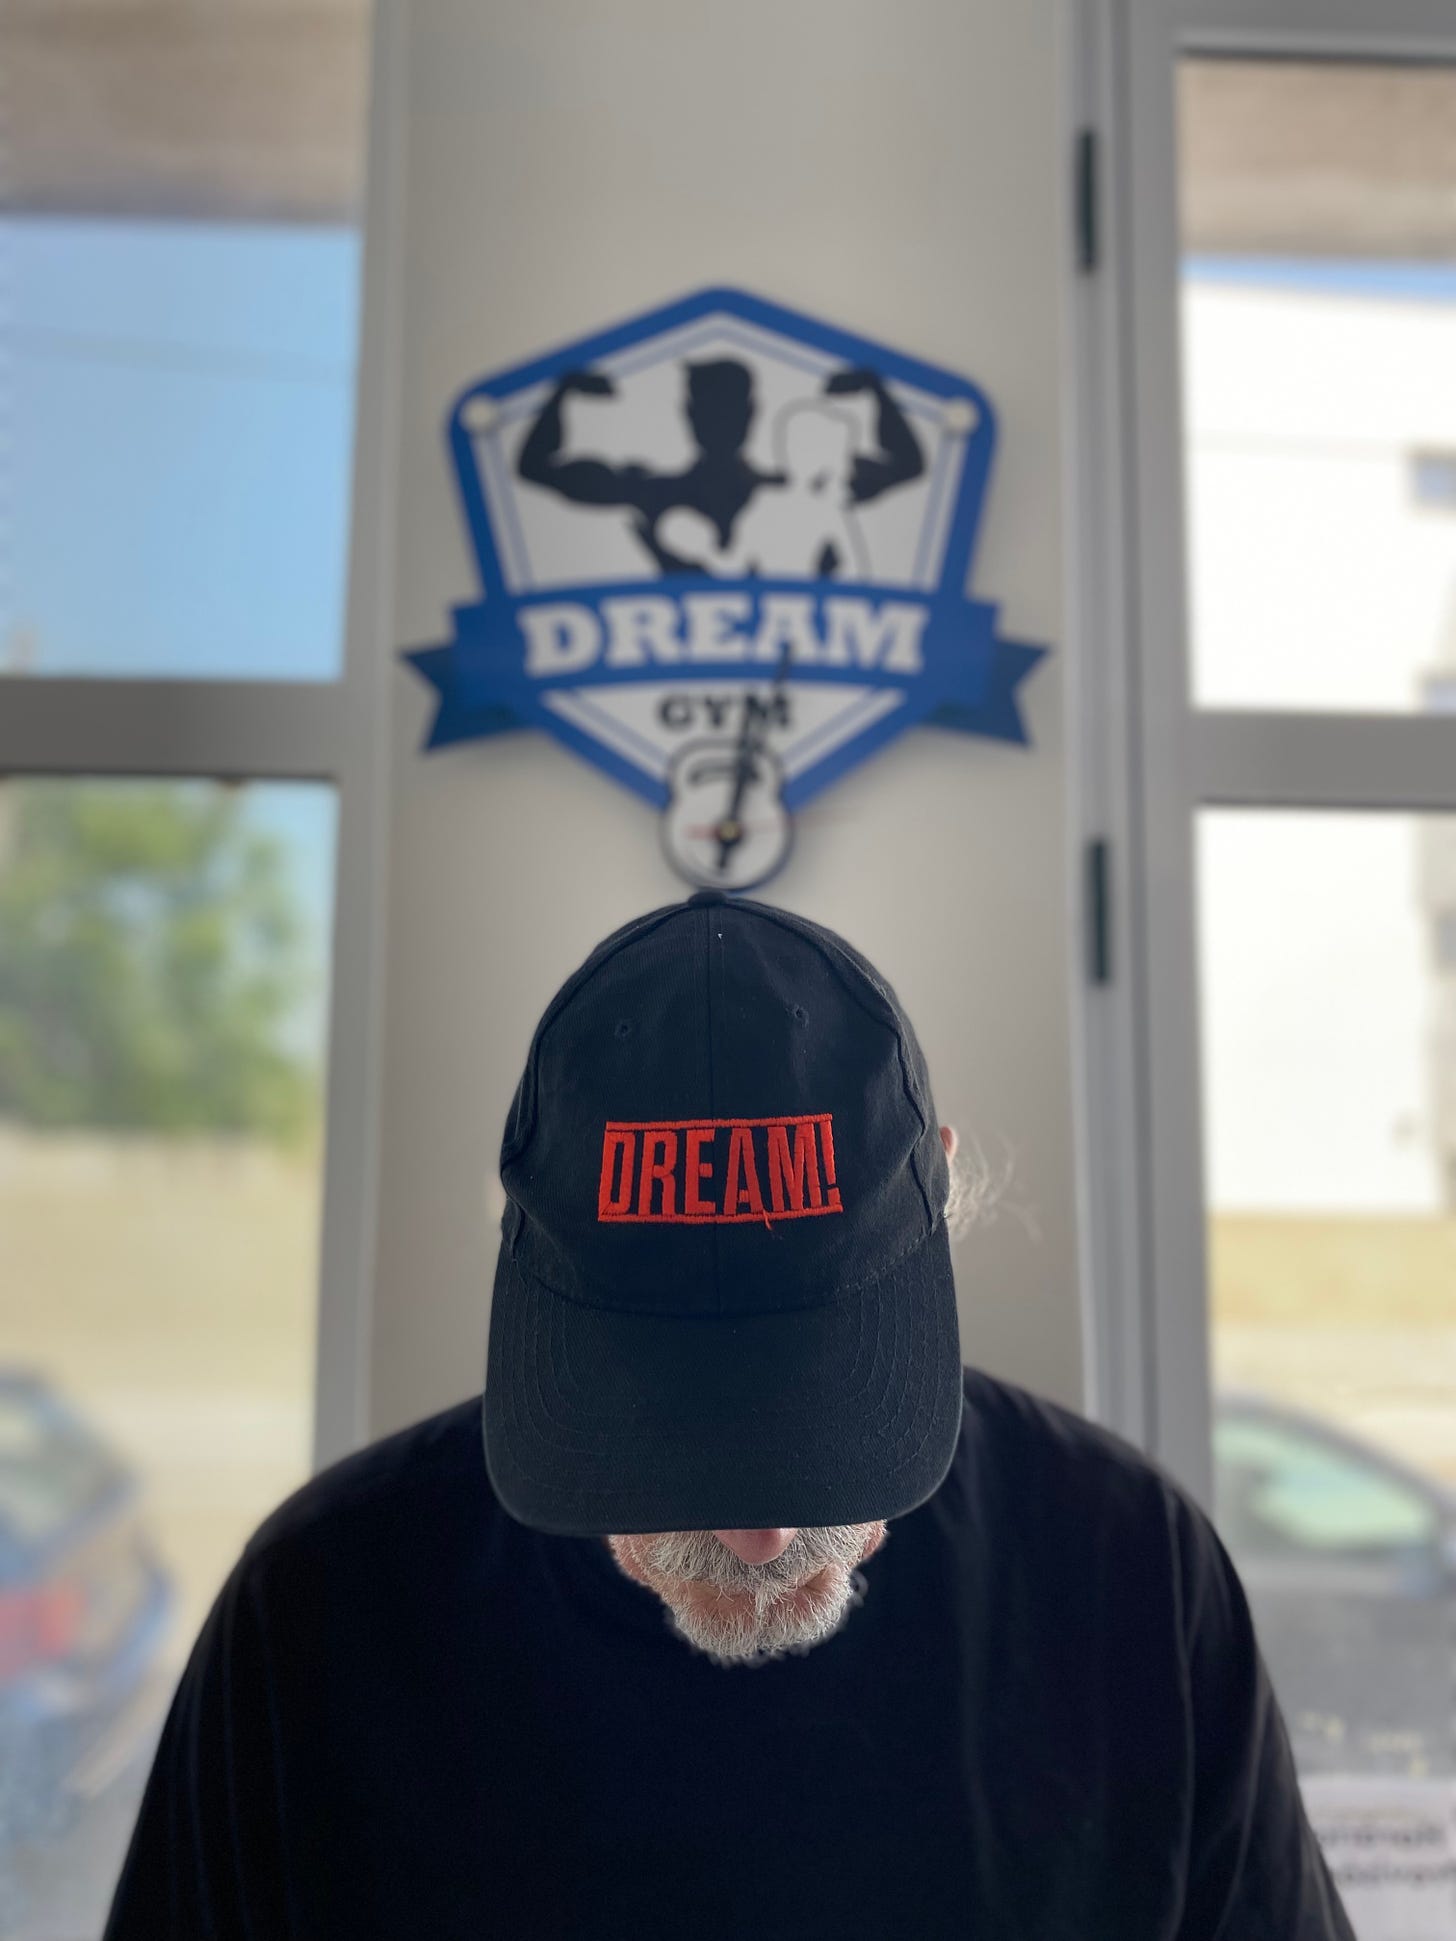 Simon with a Dream cap